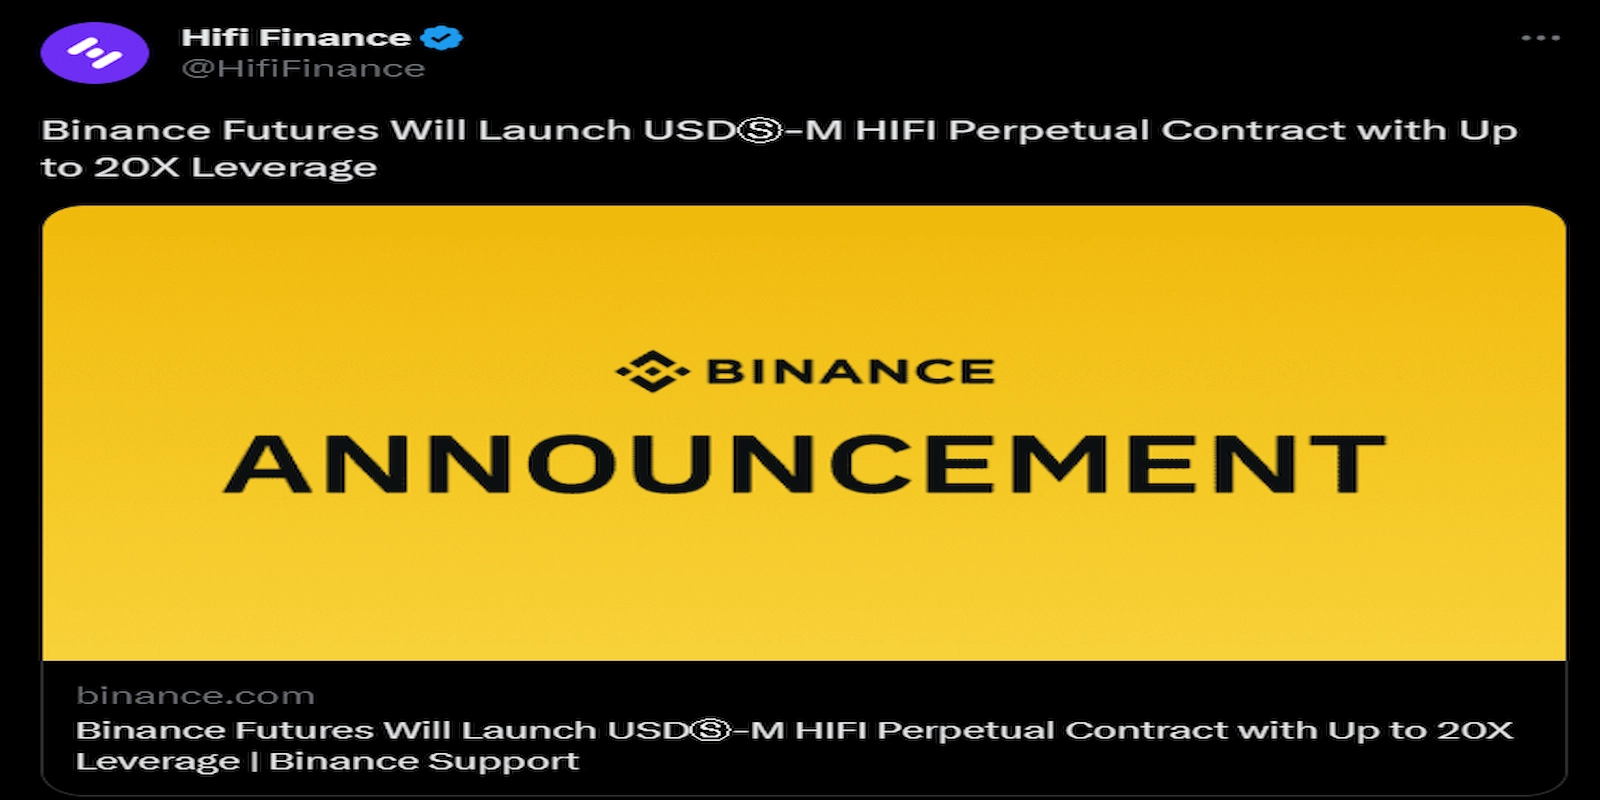 HiFi Finance shared news of Binance launching the HIFI perpetual contracts.